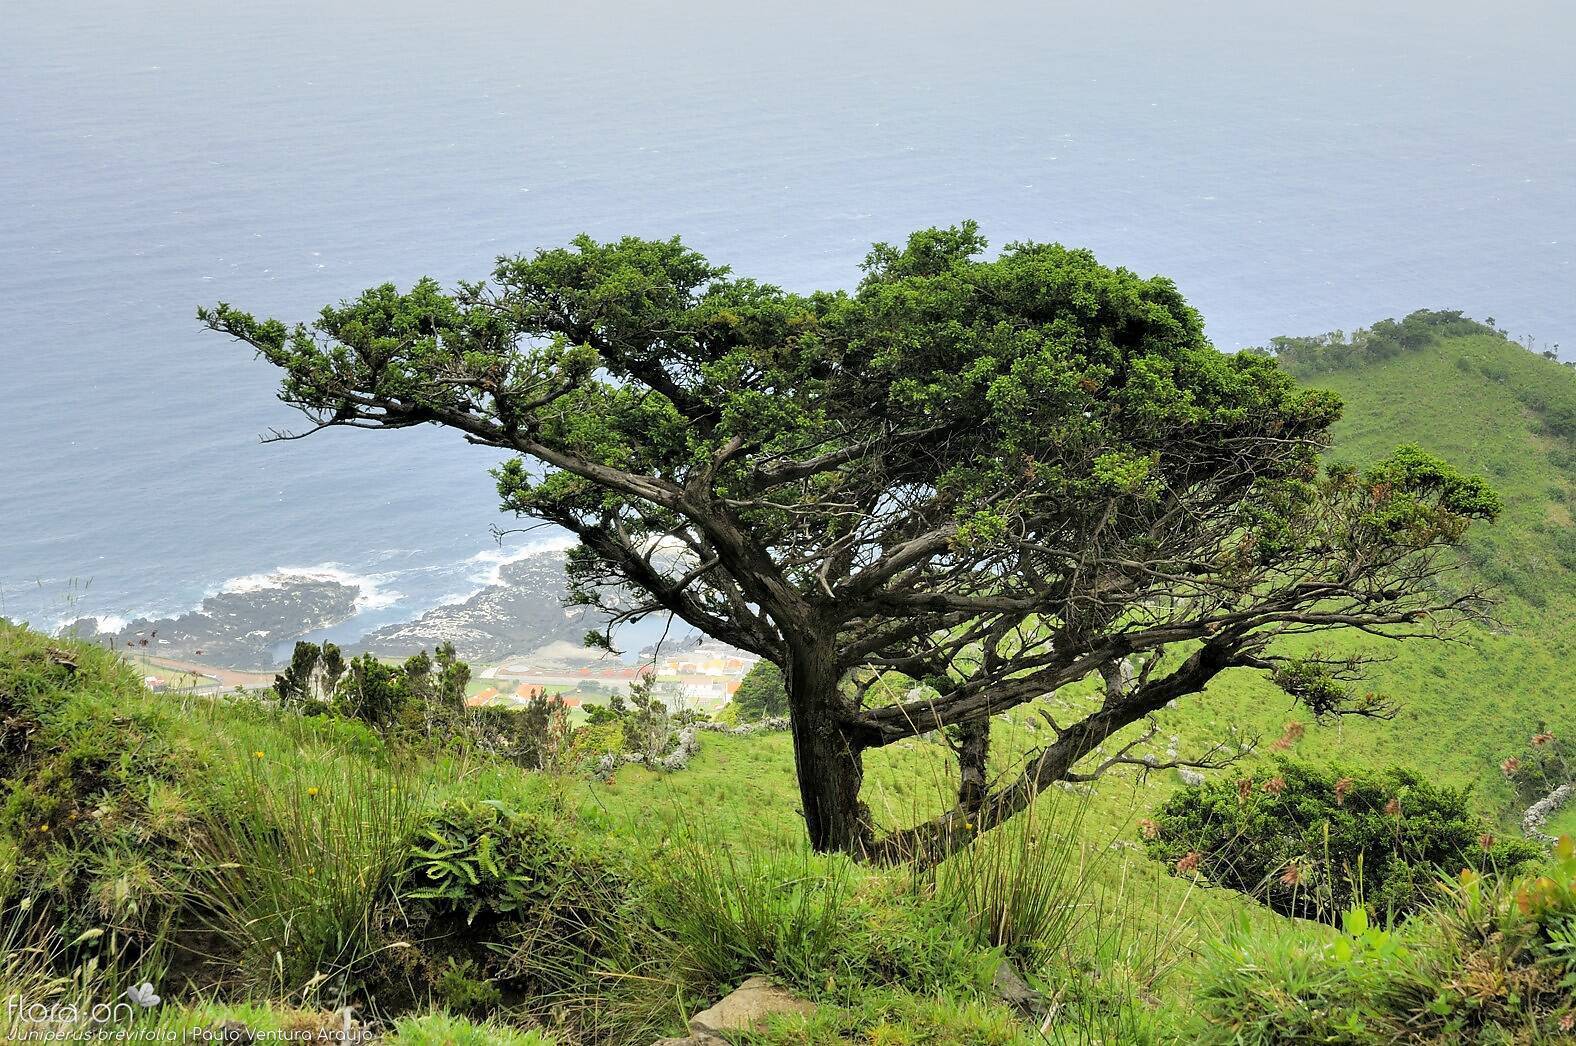 Juniperus brevifolia -  | Paulo Ventura Araújo; CC BY-NC 4.0